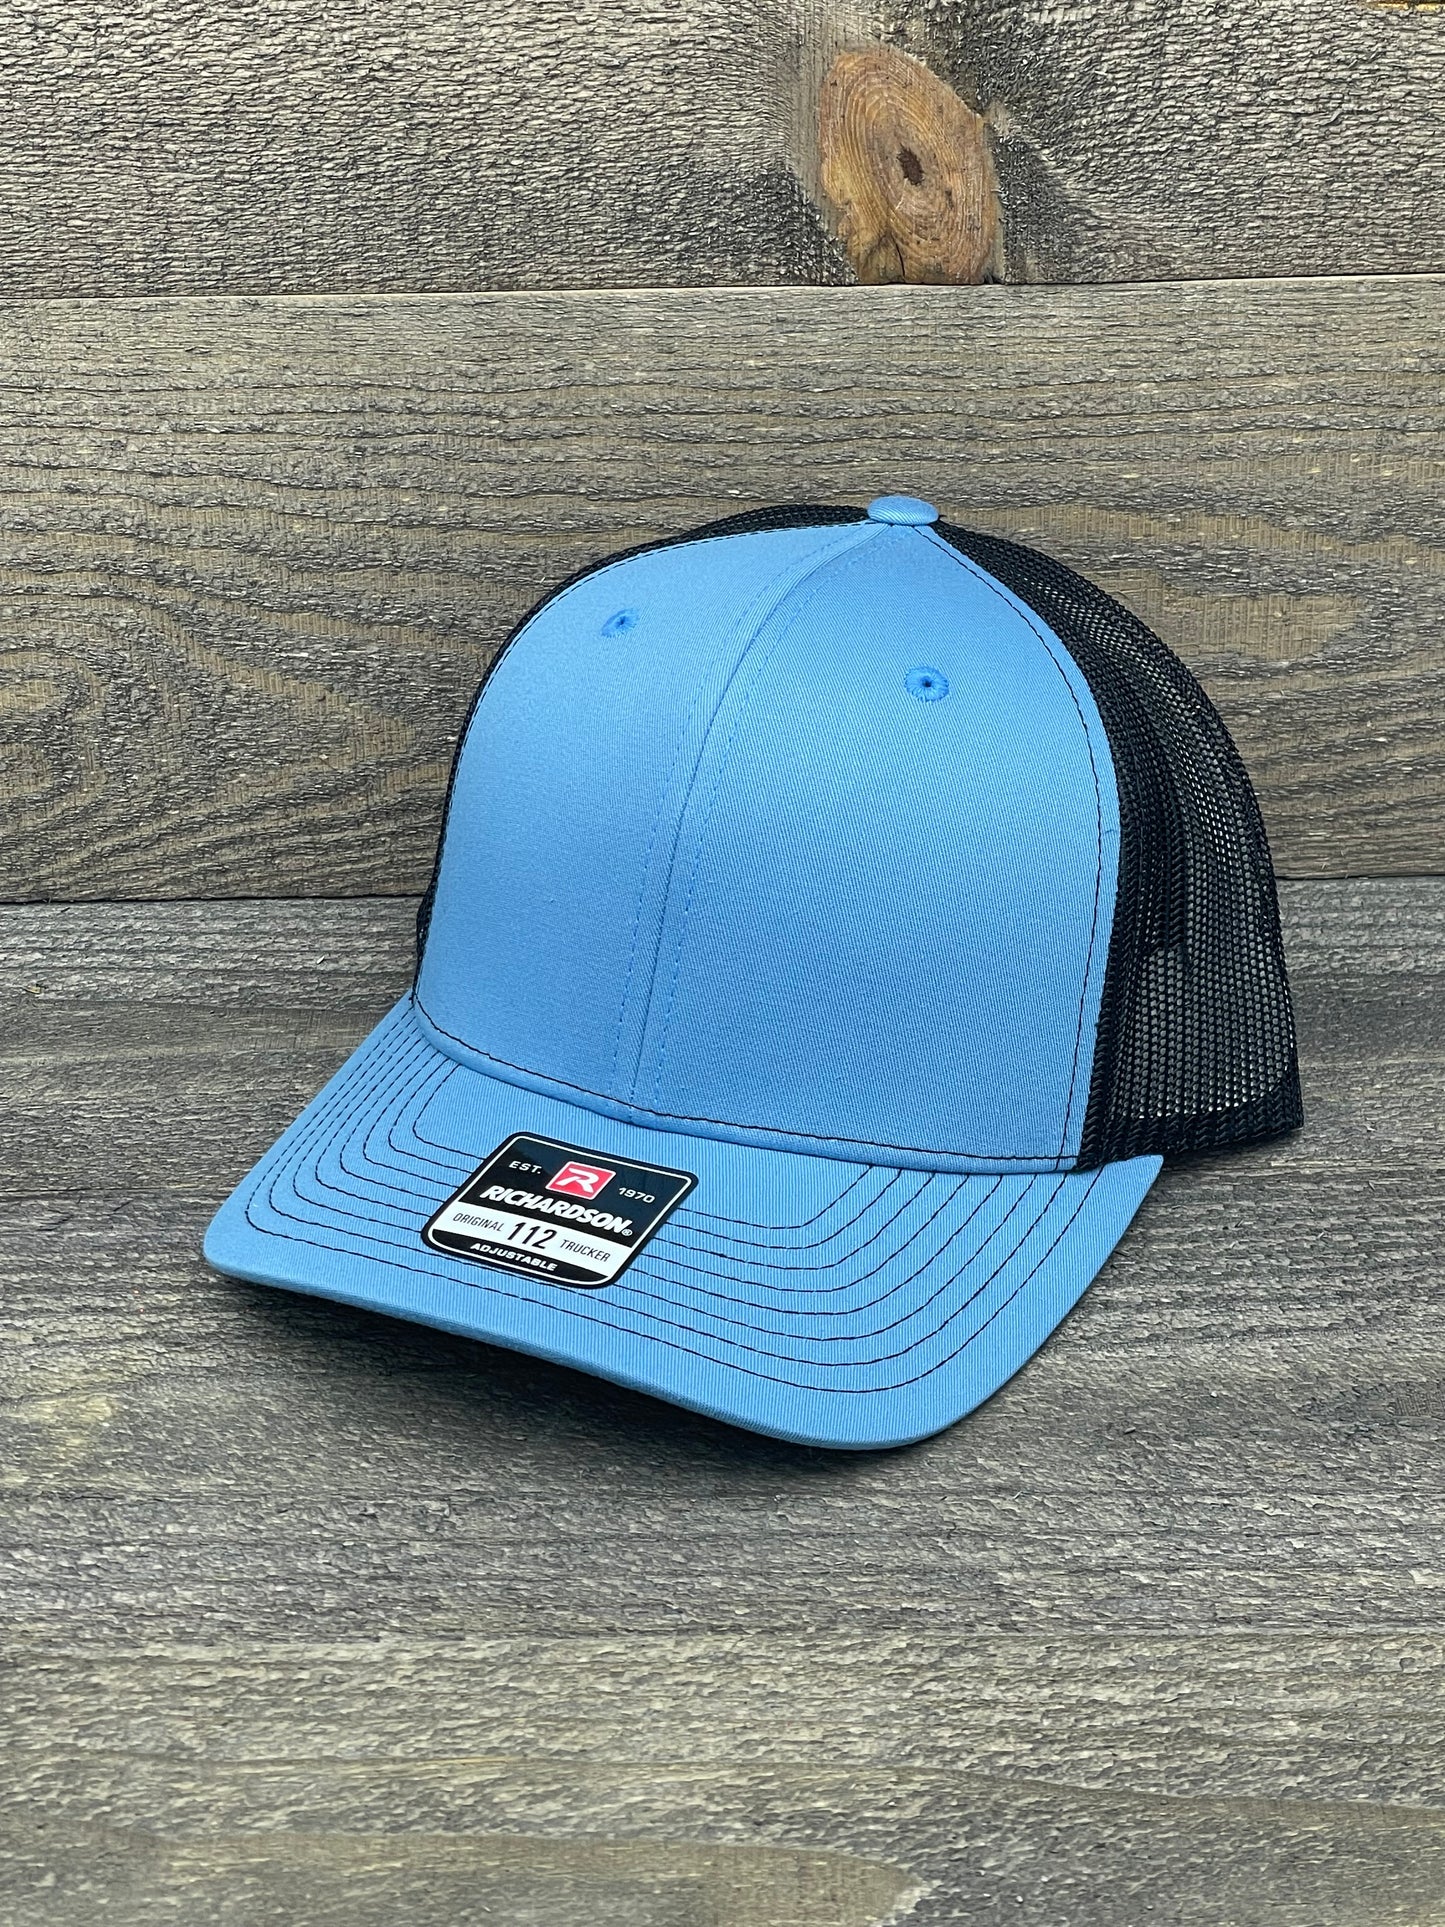 Custom Hat